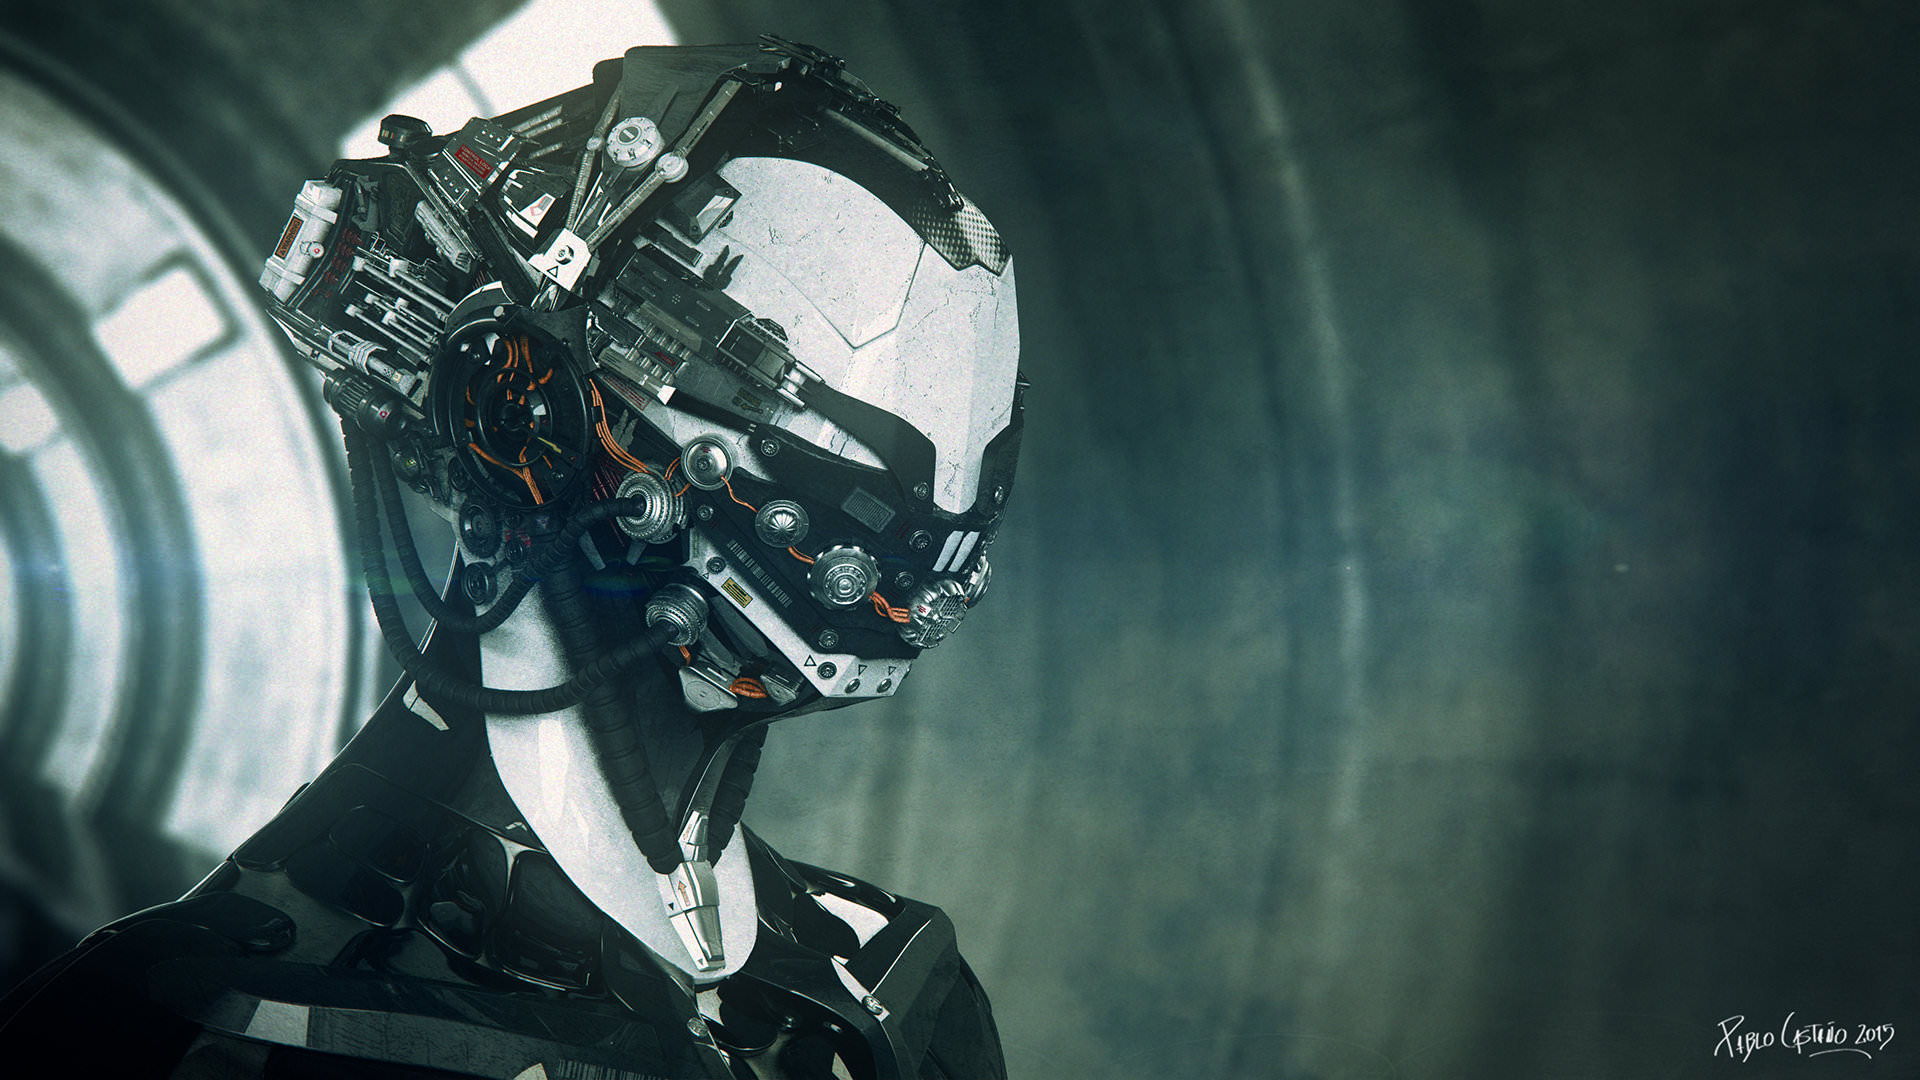 General 1920x1080 science fiction robot futuristic digital art 2015 (Year)